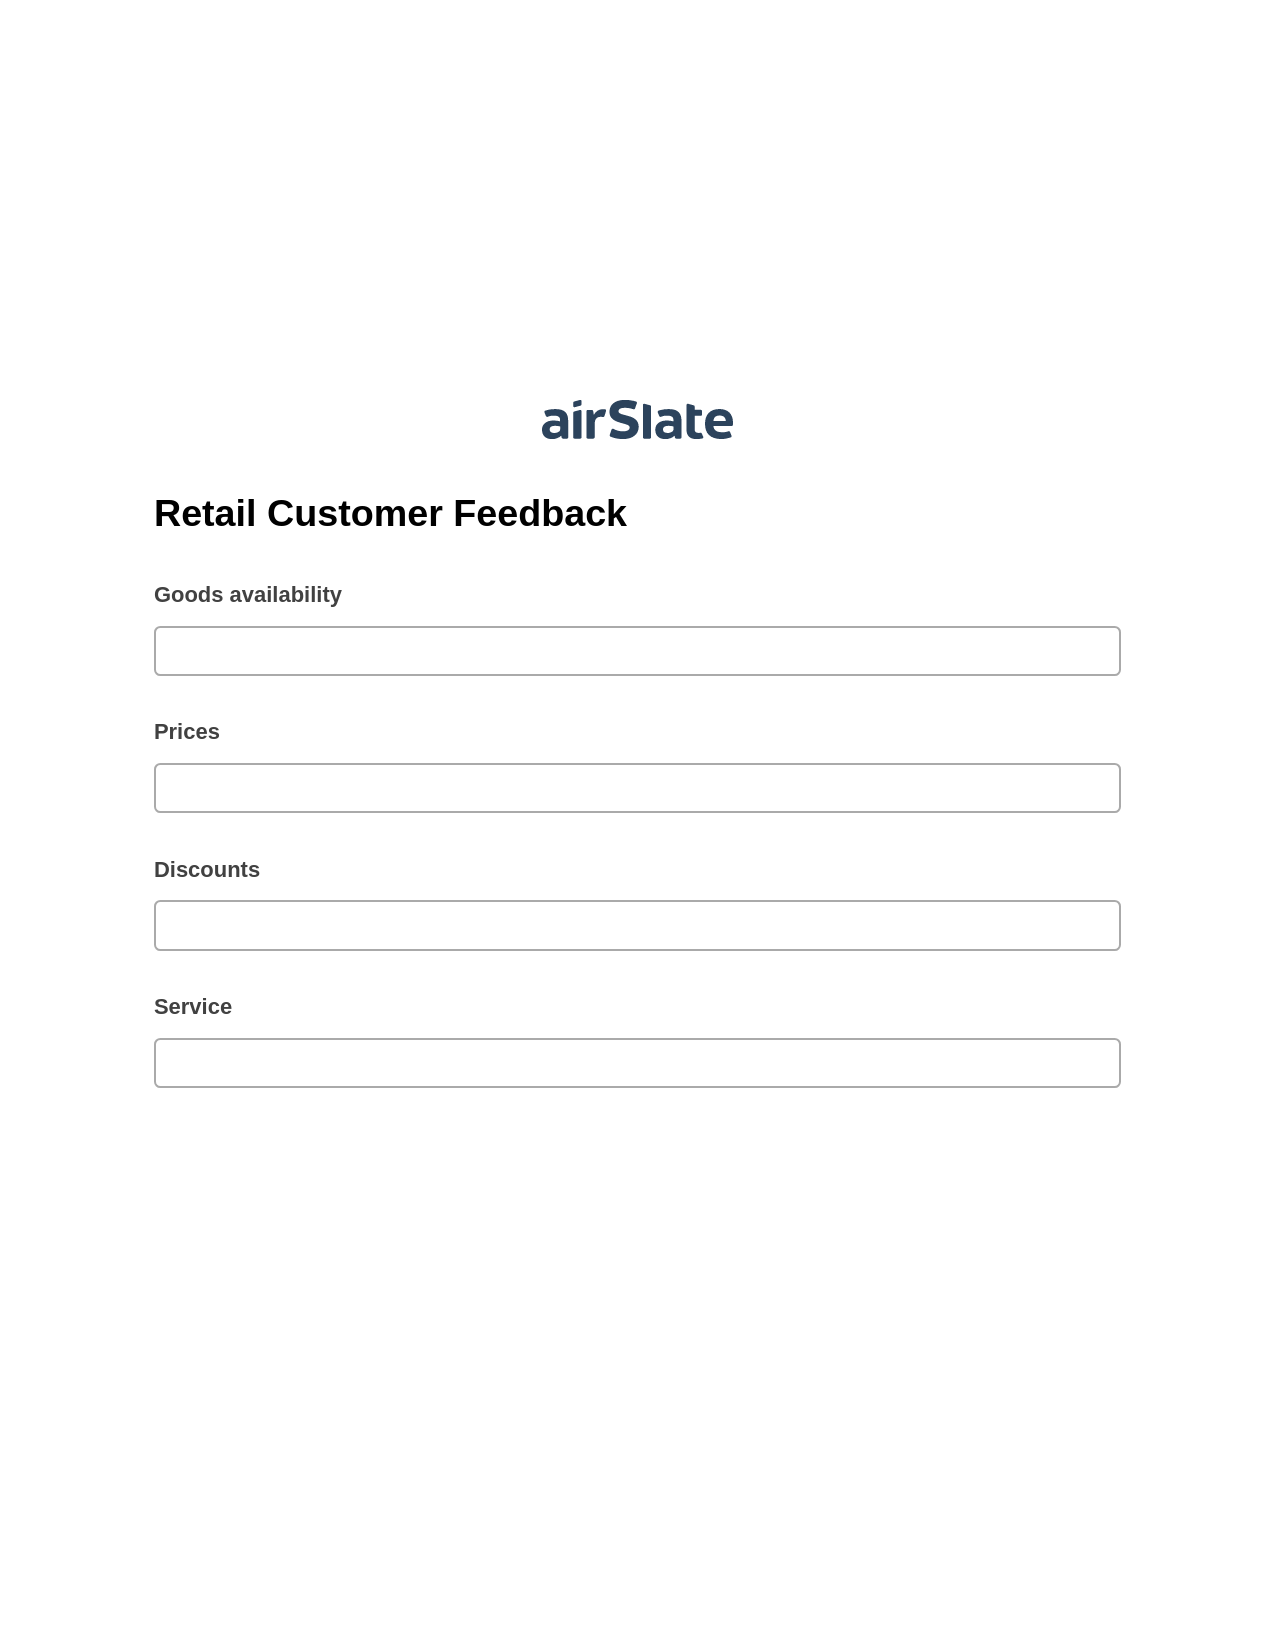 Retail Customer Feedback Pre-fill from Excel Spreadsheet Bot, Create slate bot, Export to Smartsheet